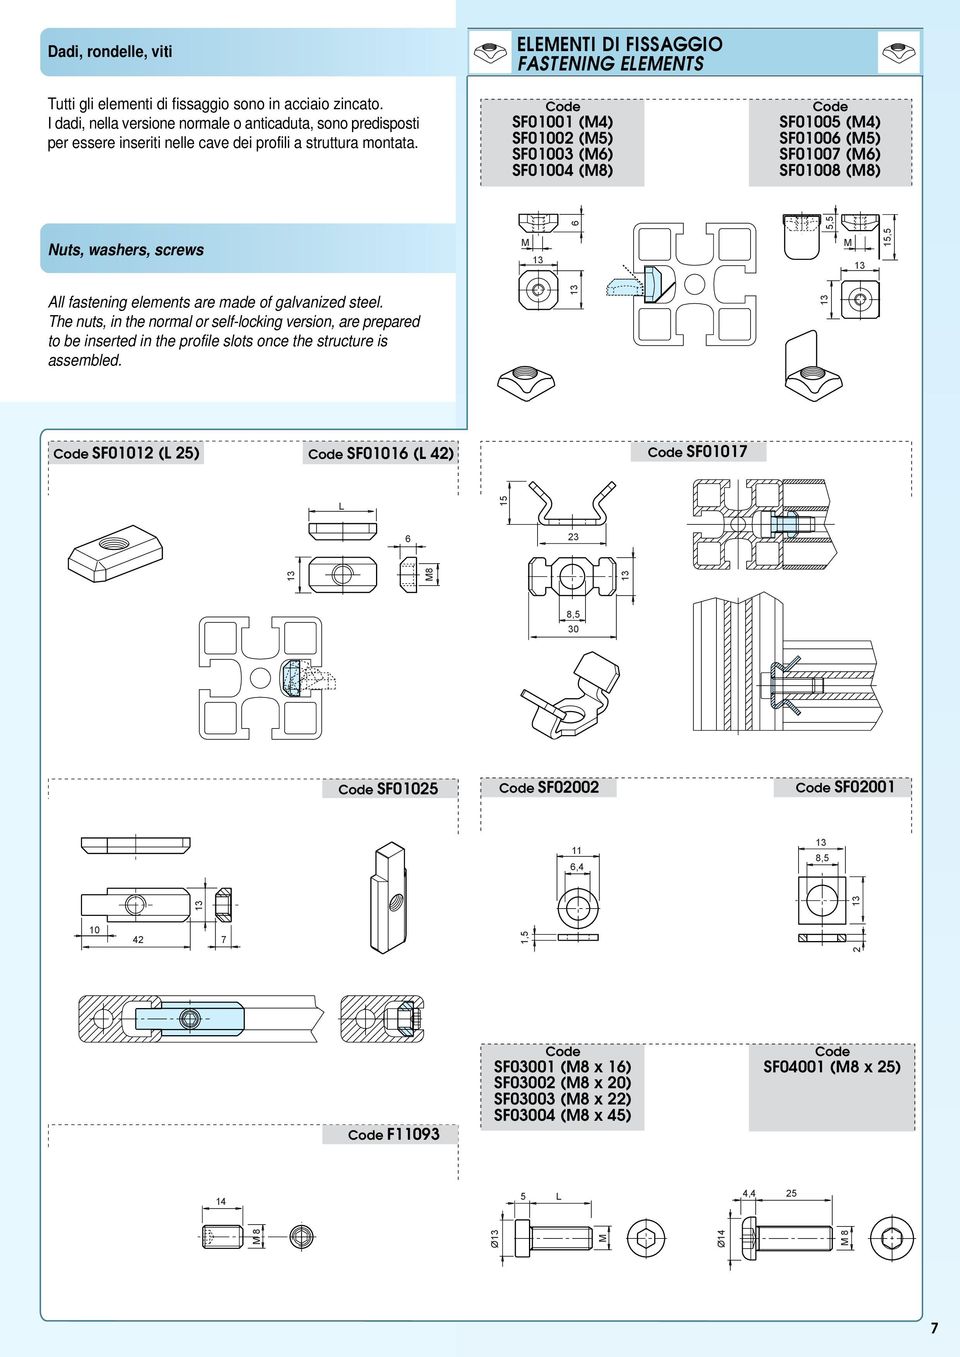 ELEMENTI DI FISSAGGIO FASTENING ELEMENTS Code SF01001 (M4) SF01002 (M5) SF01003 (M6) SF01004 (M) Code SF01005 (M4) SF01006 (M5) SF0100 (M6) SF0100 (M) Nuts, washers, screws All fastening elements are